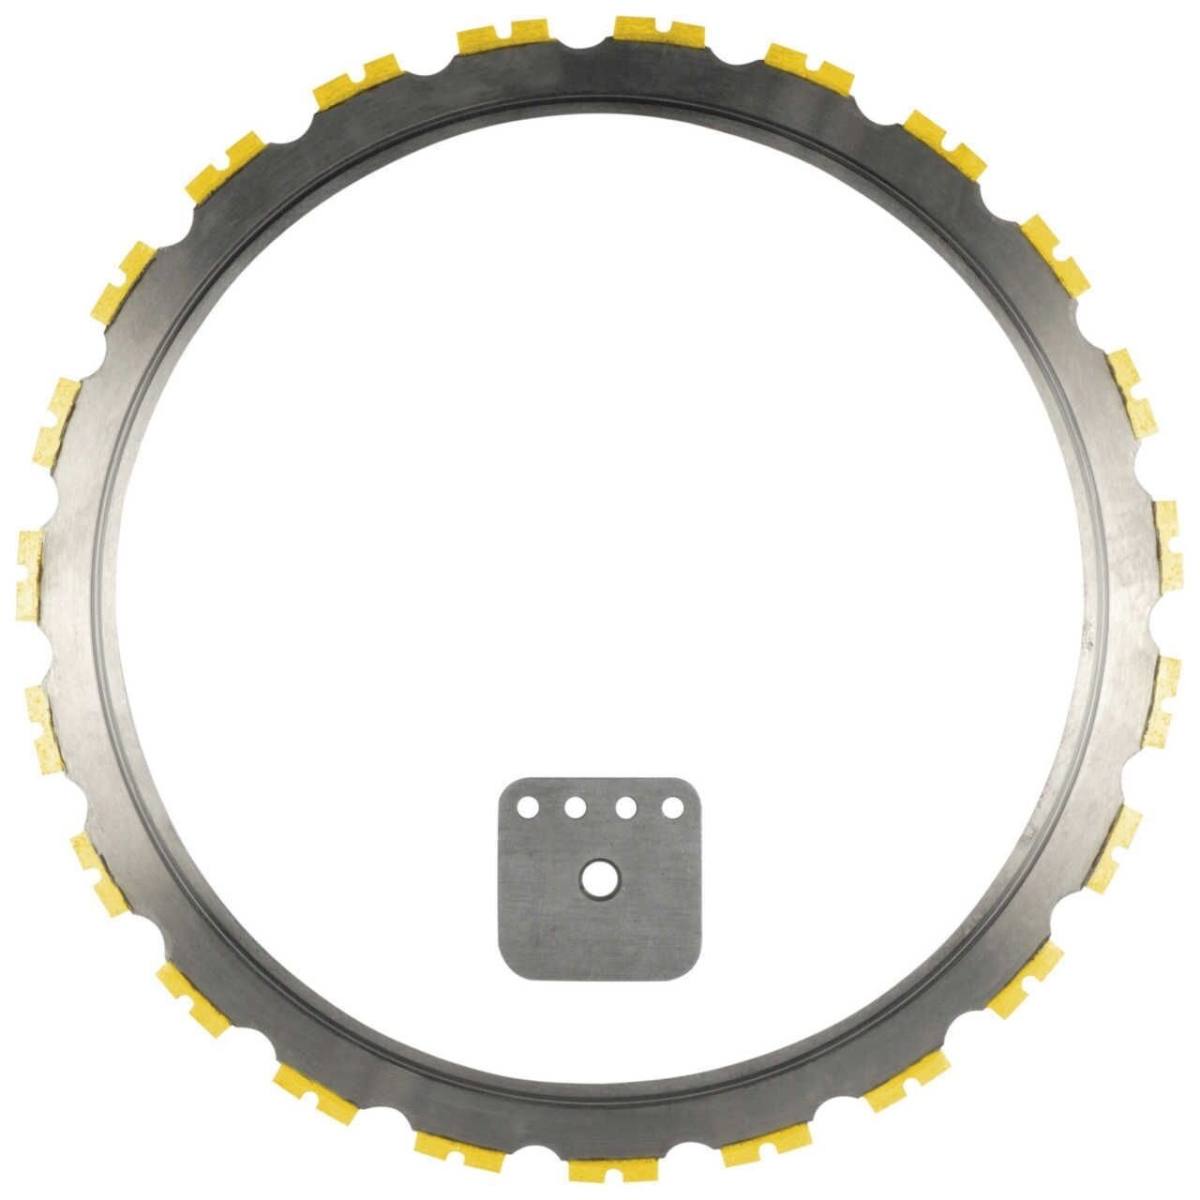 TYROLIT ring saw blade DxD/ExH 506x3.9/3.05x421.7 RSL | ?˜ 406 mm / 506 mm, form: C1W, Art. 738473